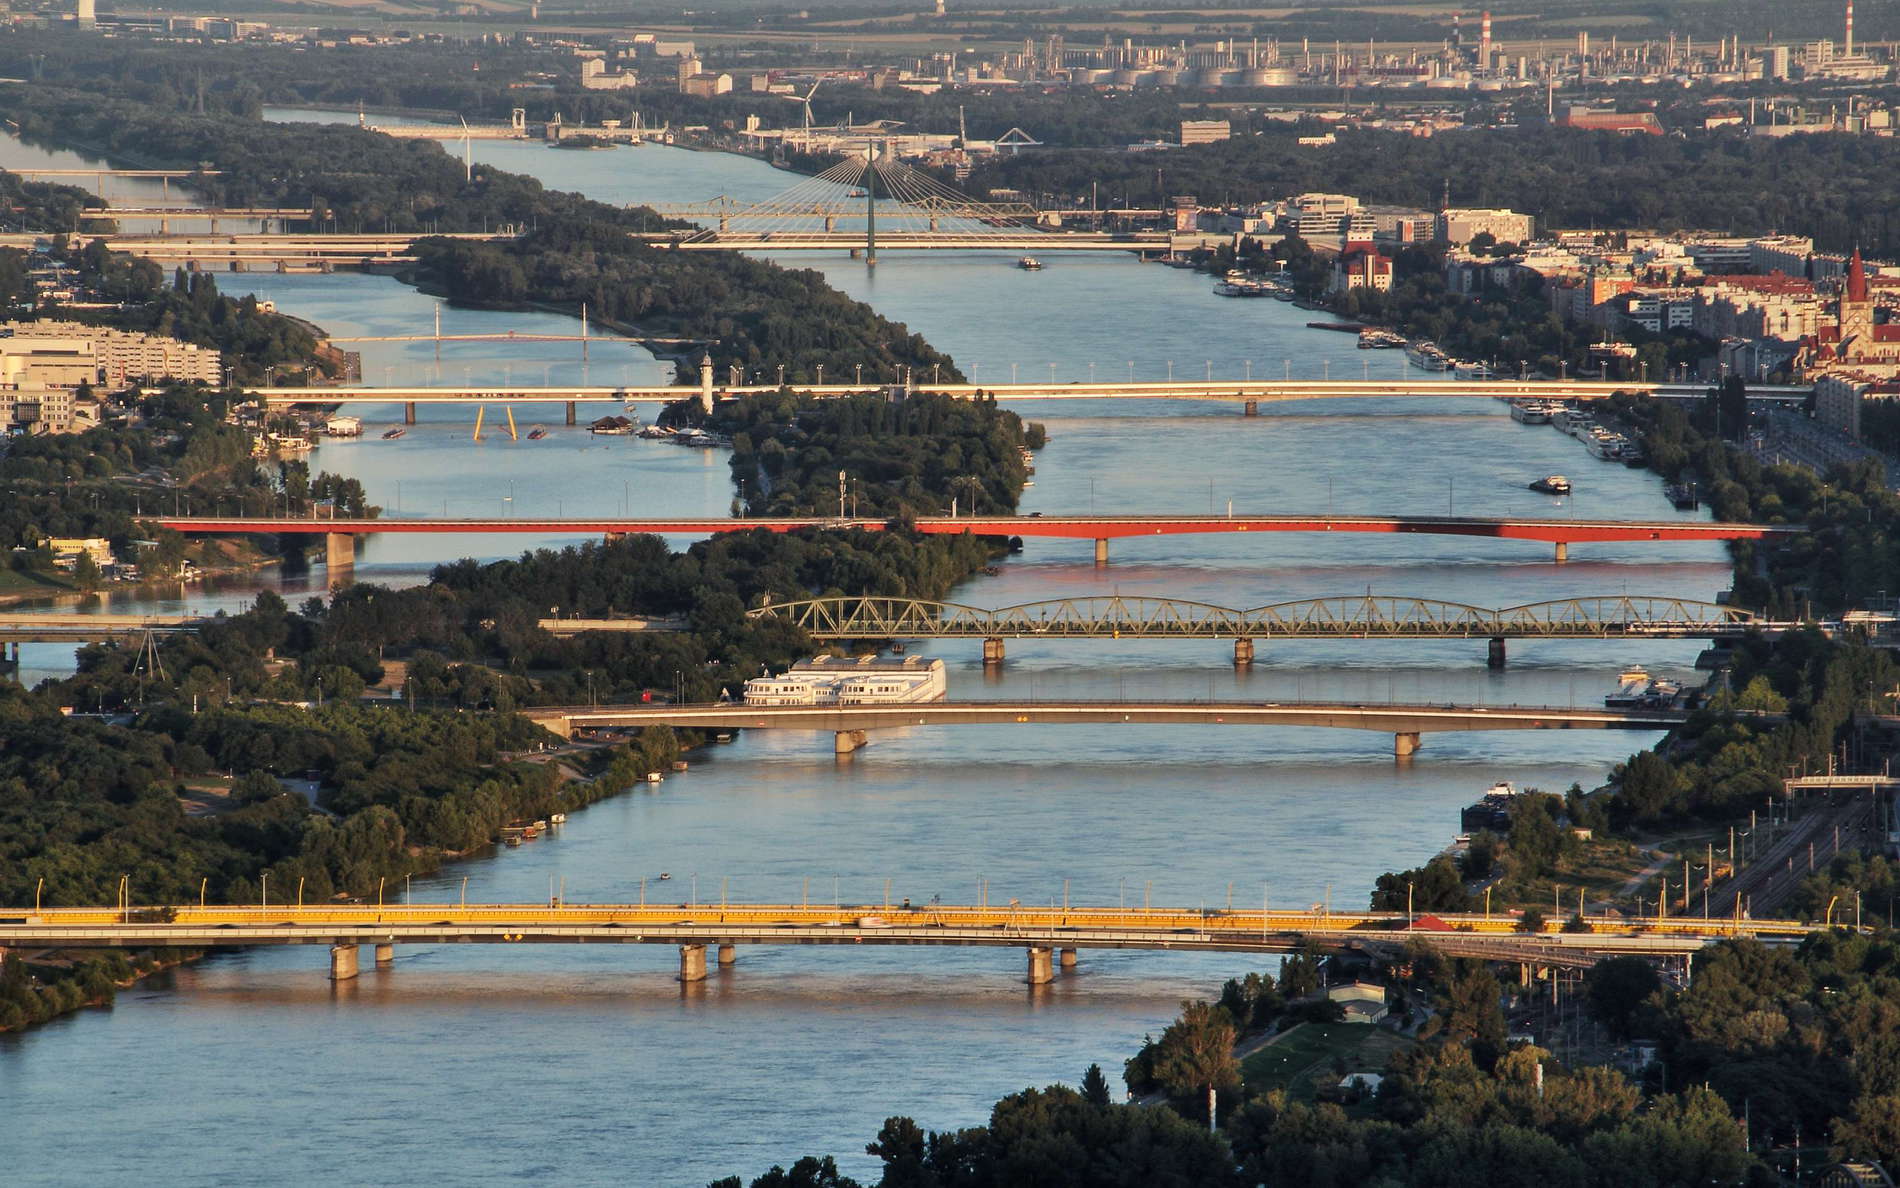 Wien | Donau with bridges